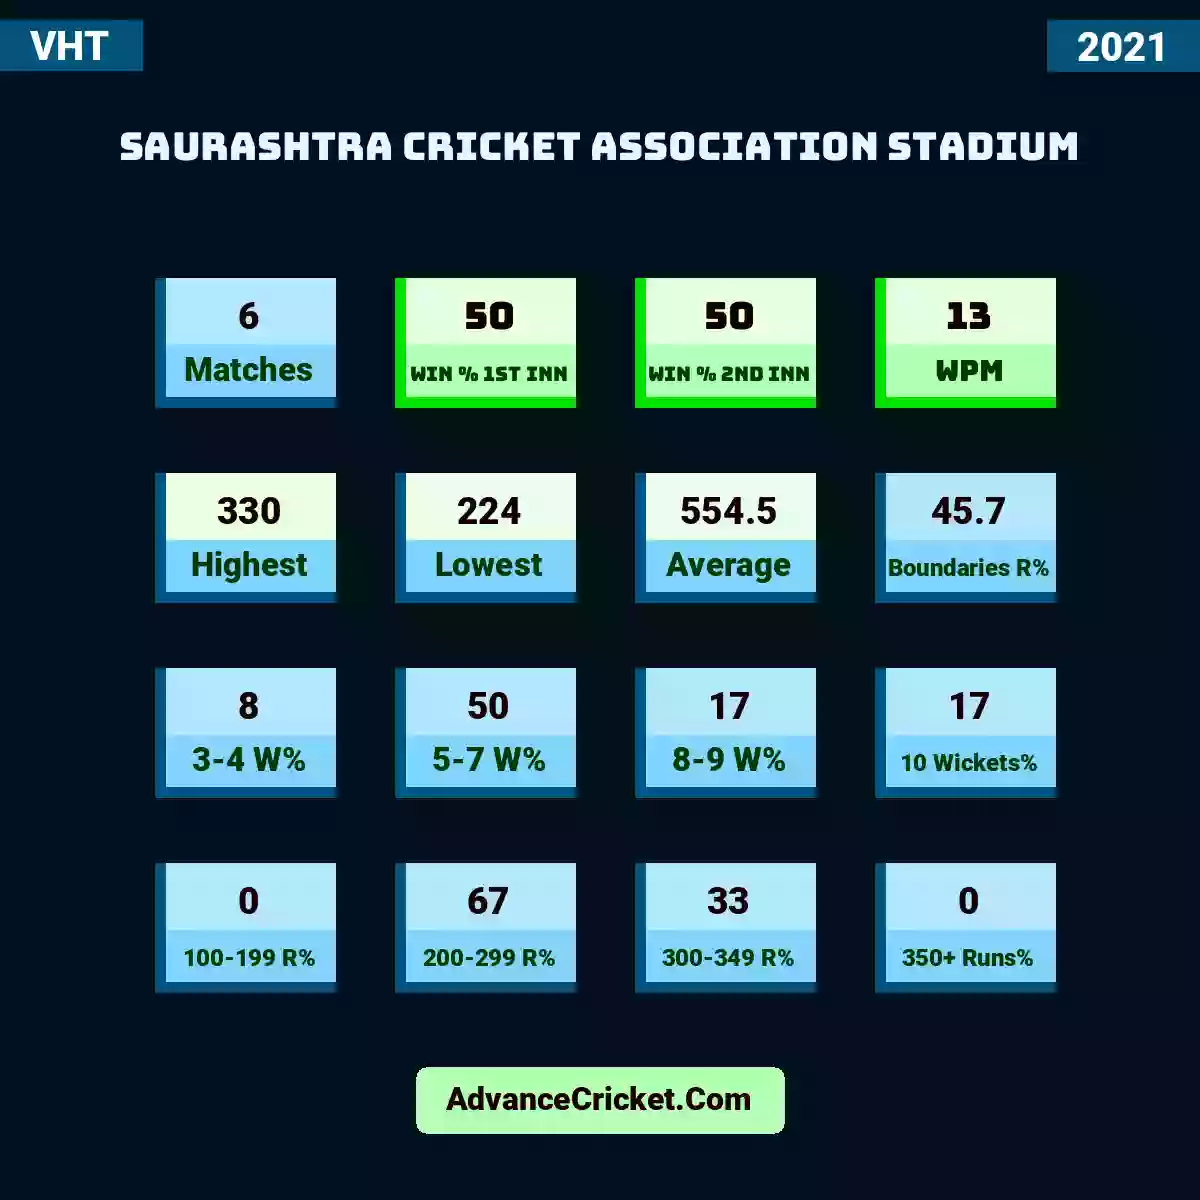 Image showing Saurashtra Cricket Association Stadium with Matches: 6, Win % 1st Inn: 50, Win % 2nd Inn: 50, WPM: 13, Highest: 330, Lowest: 224, Average: 554.5, Boundaries R%: 45.7, 3-4 W%: 8, 5-7 W%: 50, 8-9 W%: 17, 10 Wickets%: 17, 100-199 R%: 0, 200-299 R%: 67, 300-349 R%: 33, 350+ Runs%: 0.